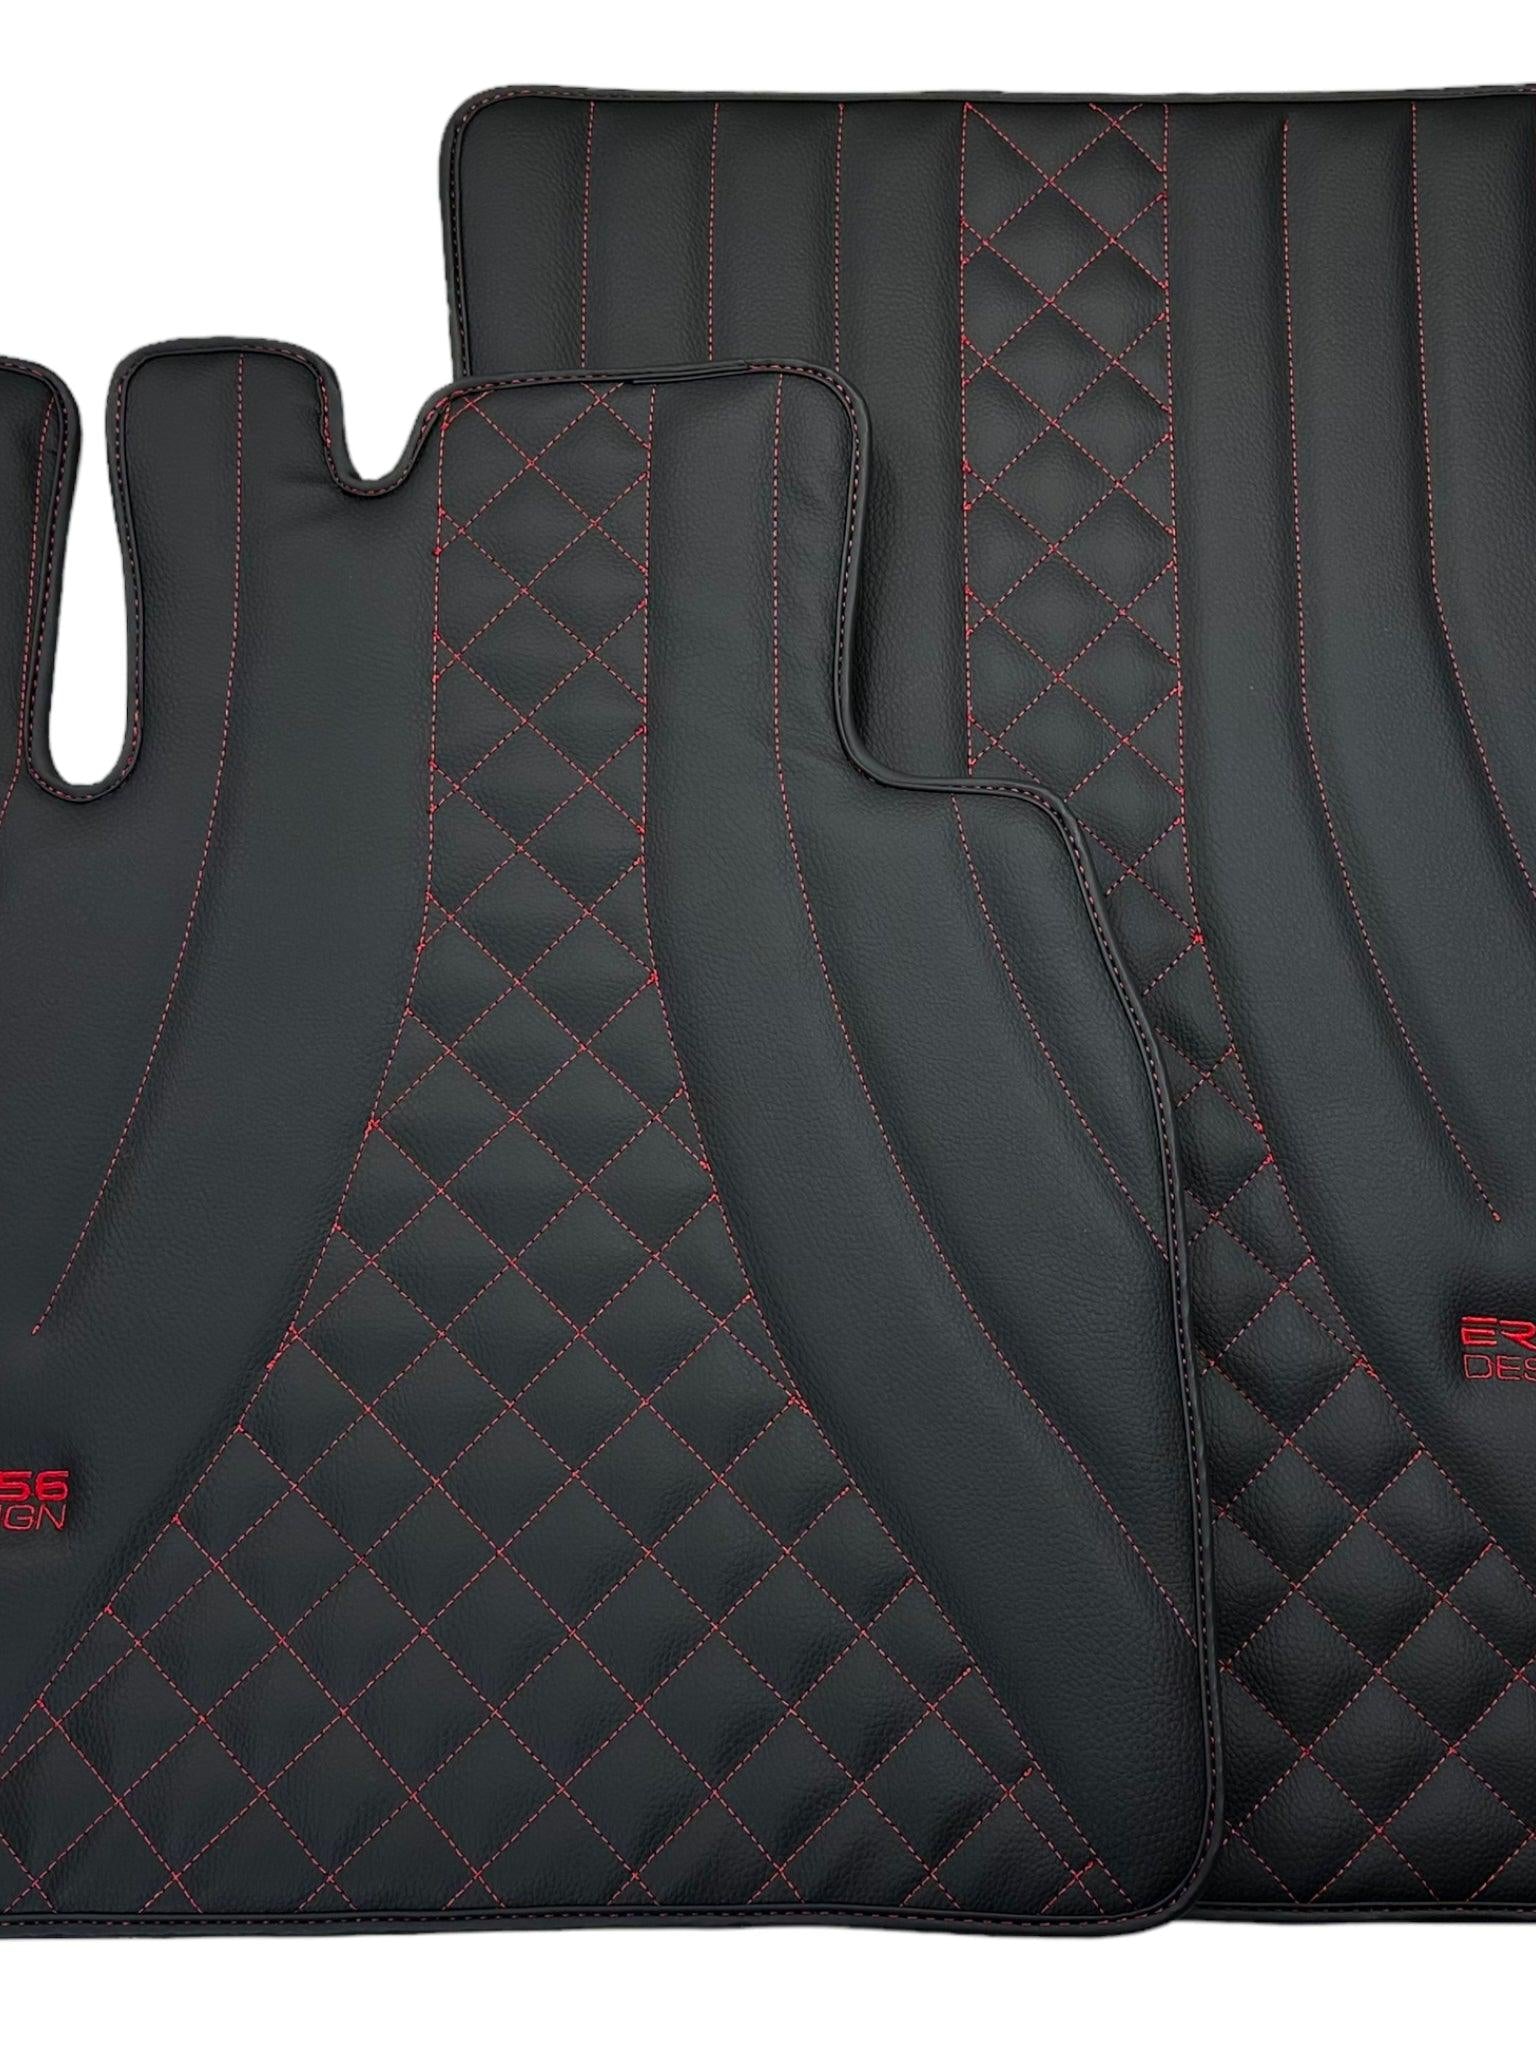 Black Leather Floor Mats for Mercedes-Benz G Class W463 (2008-2018) ER56 Design